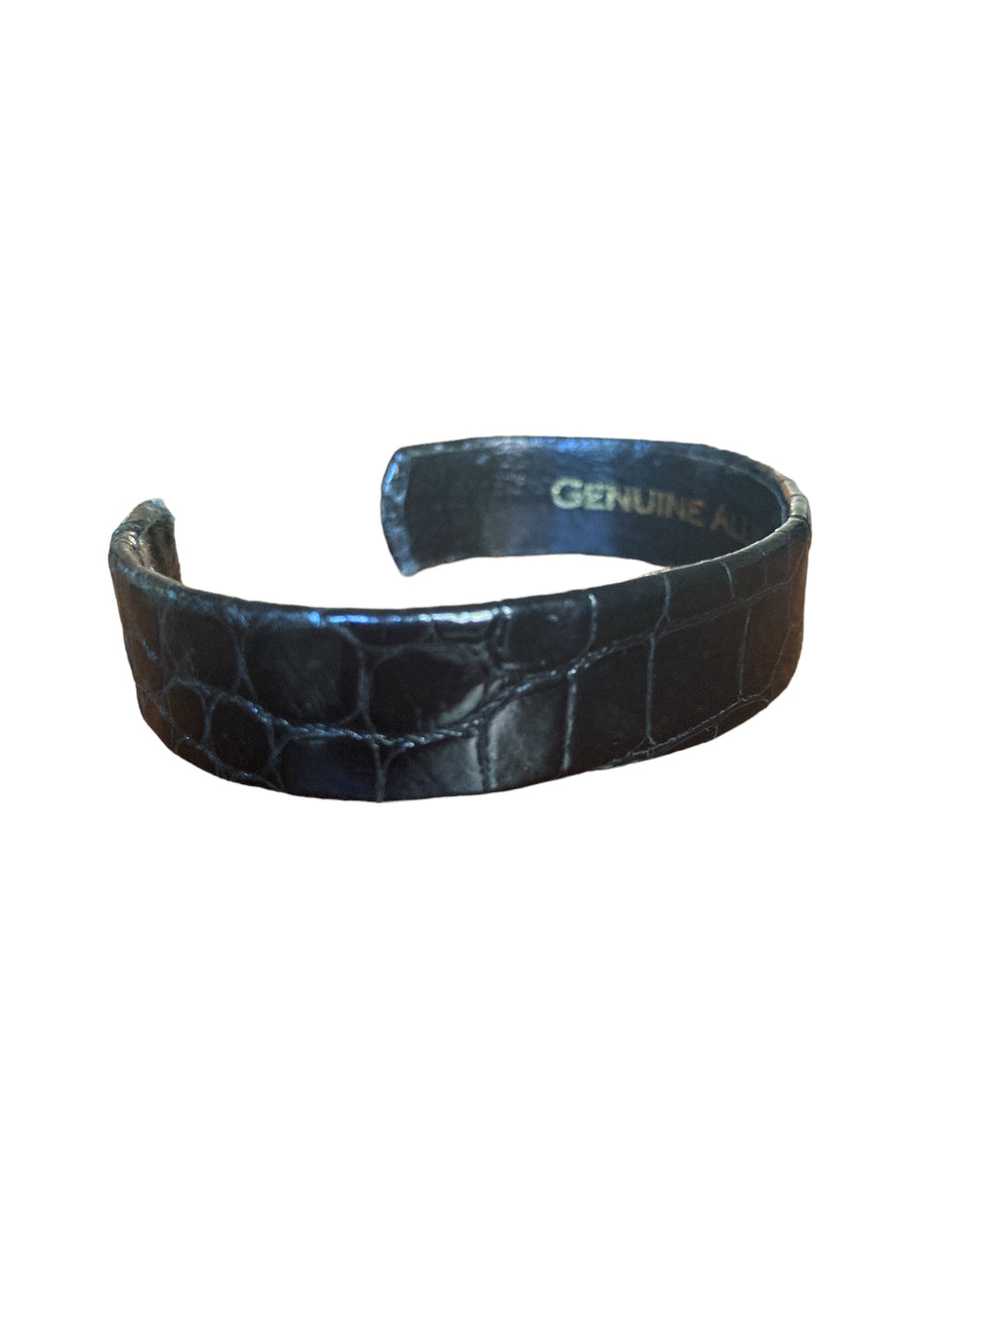 Plato Alligator Glazed Black Bracelet Cuff - image 1